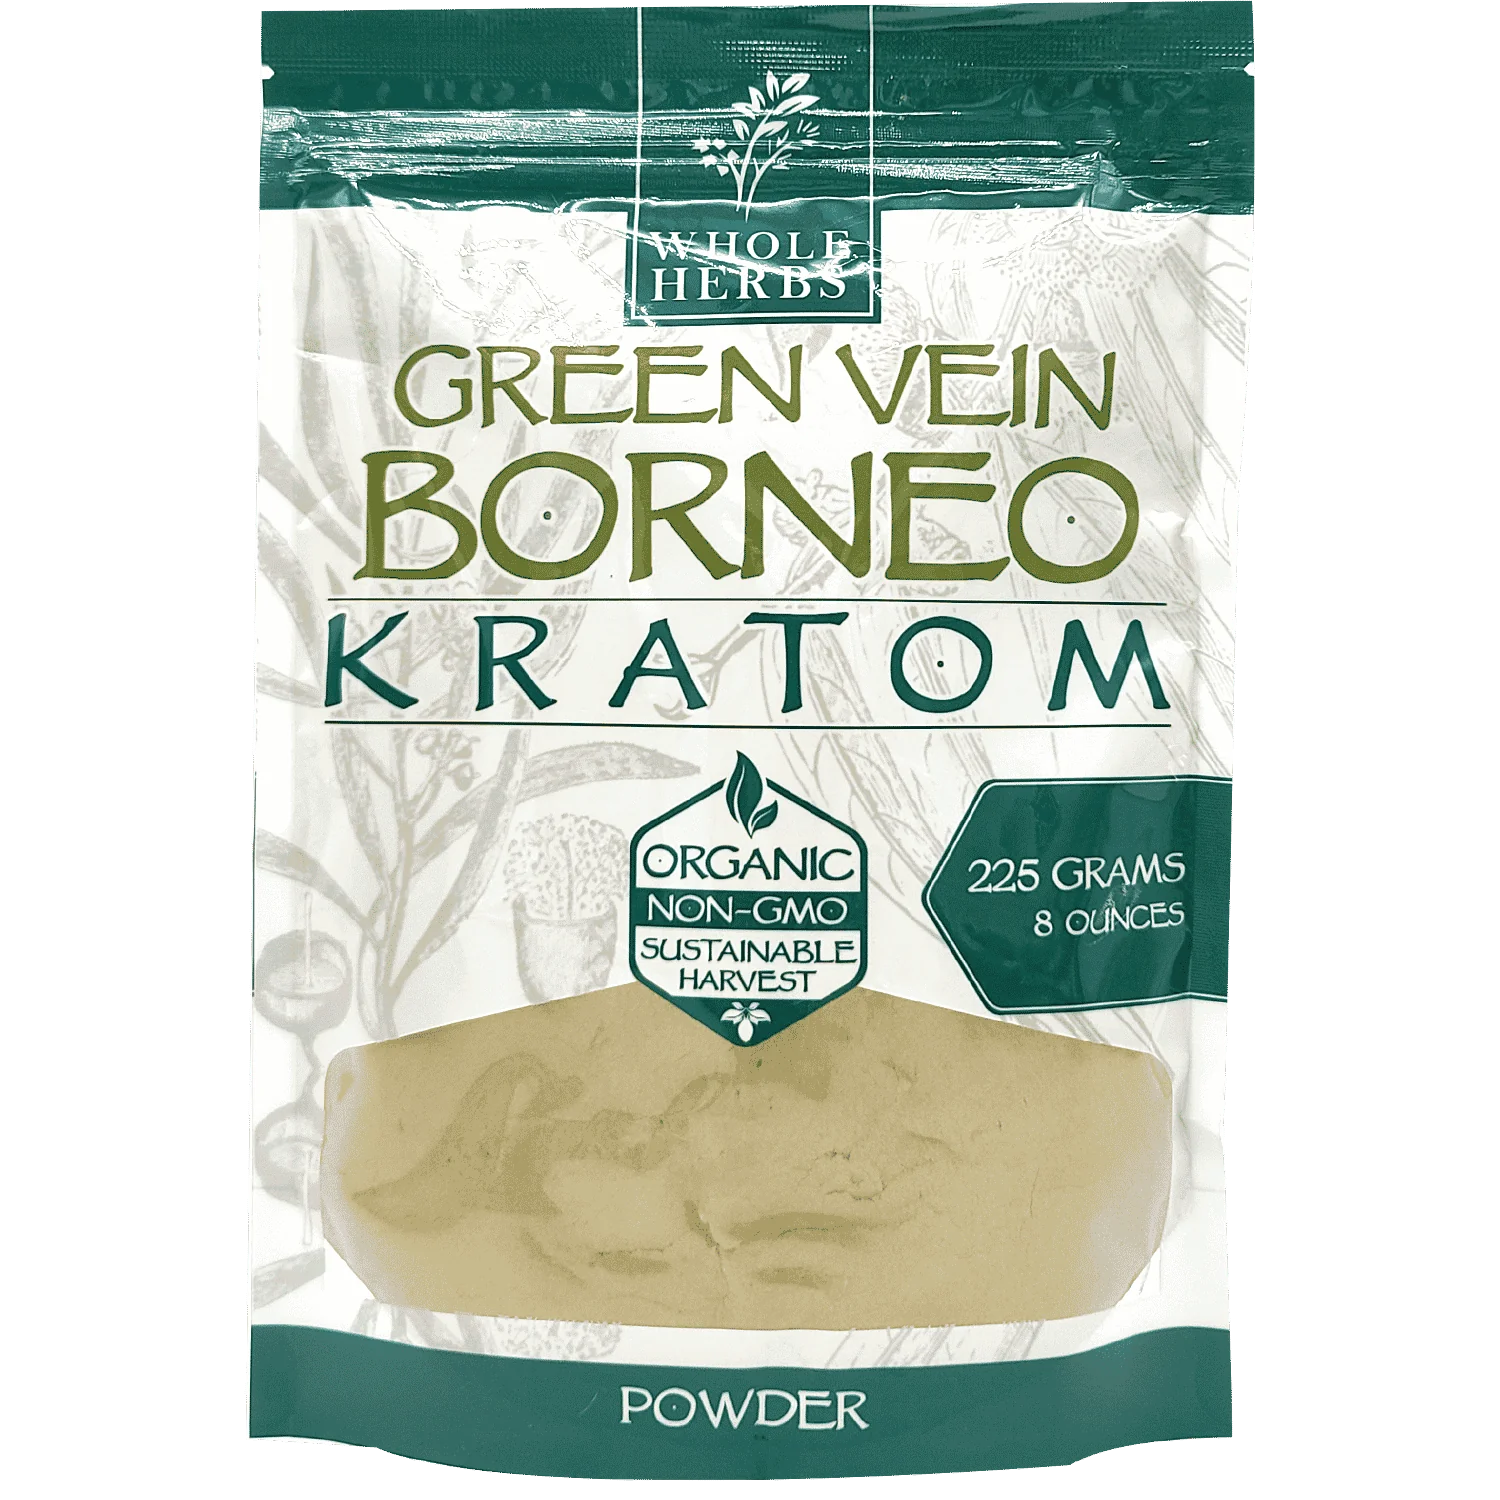 Whole Herbs Powder Kratom Whole Herbs Green Vein Borneo 3.5 Ounces 